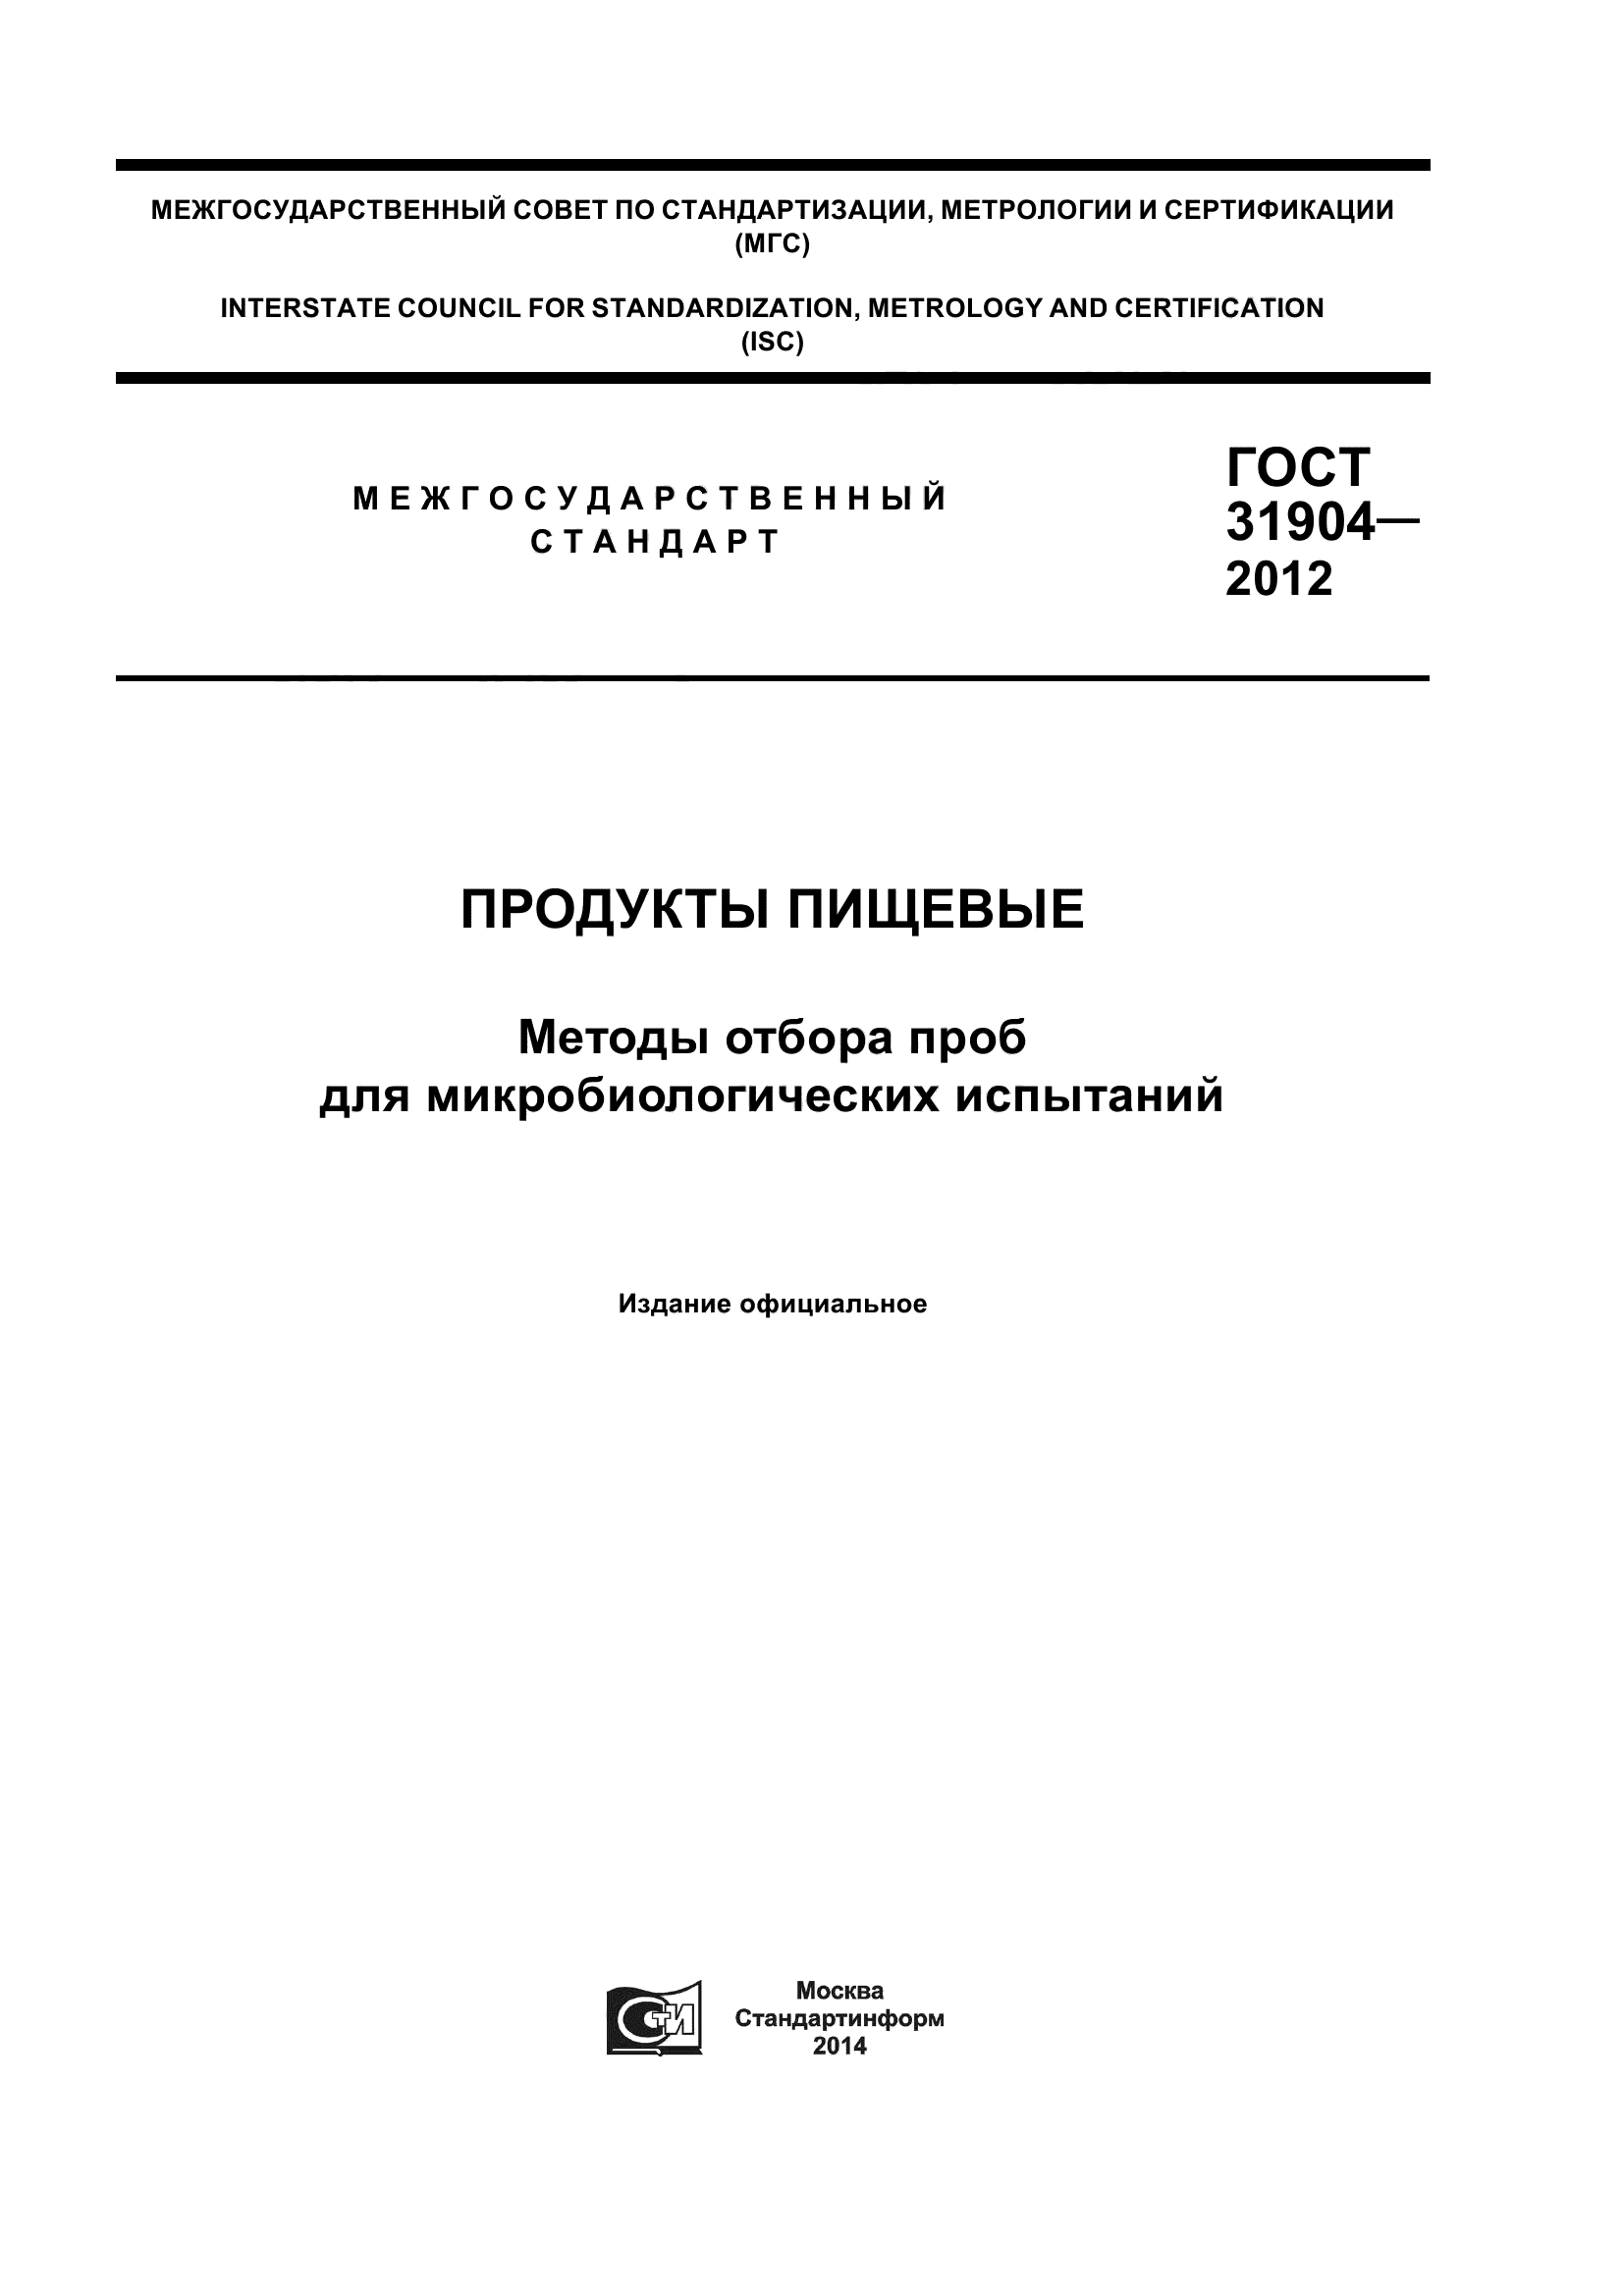 ГОСТ 31904-2012